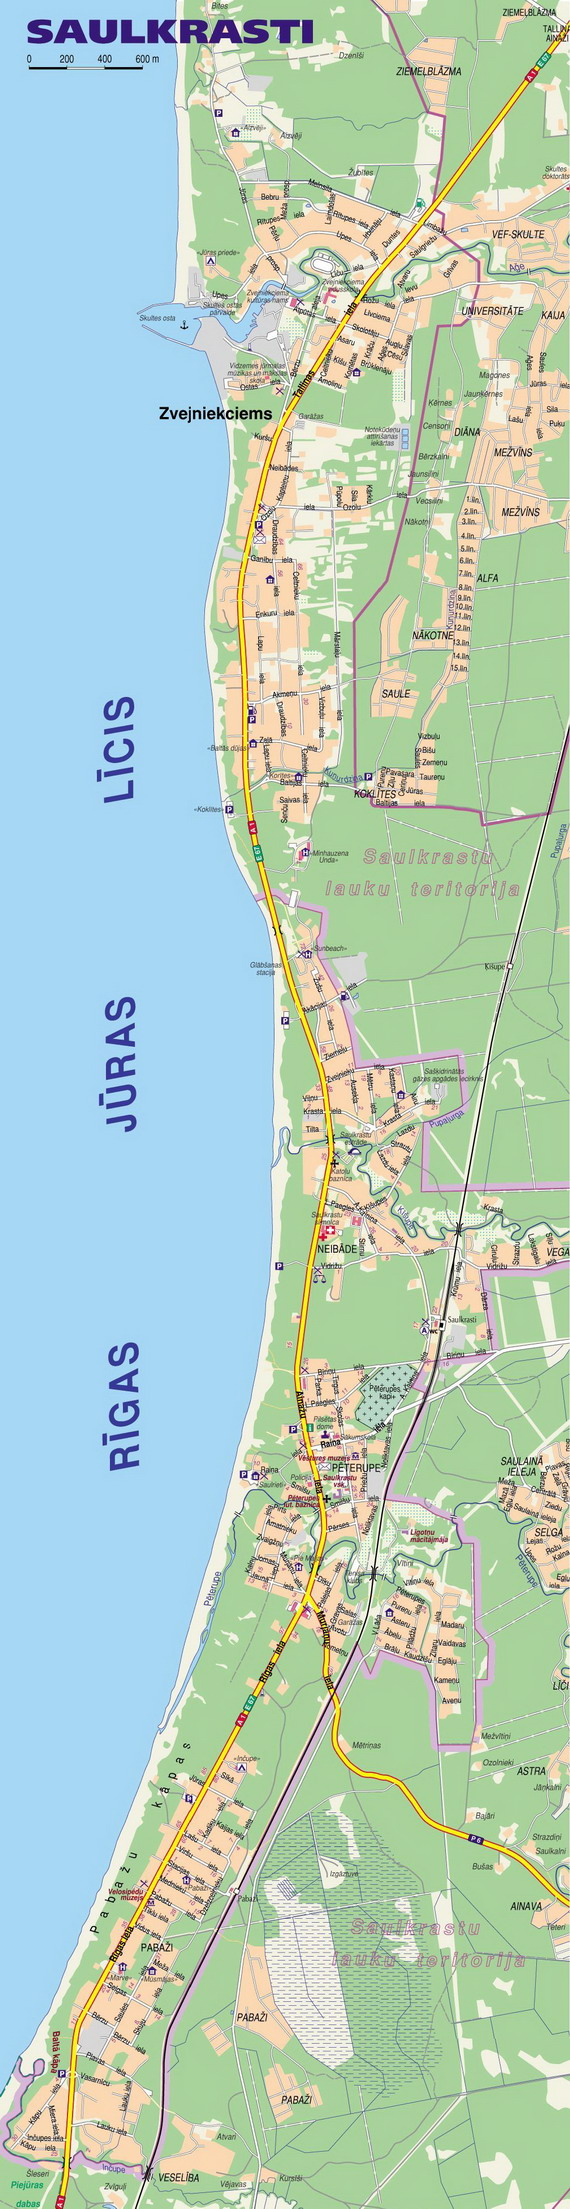 Карта Саулкрасты